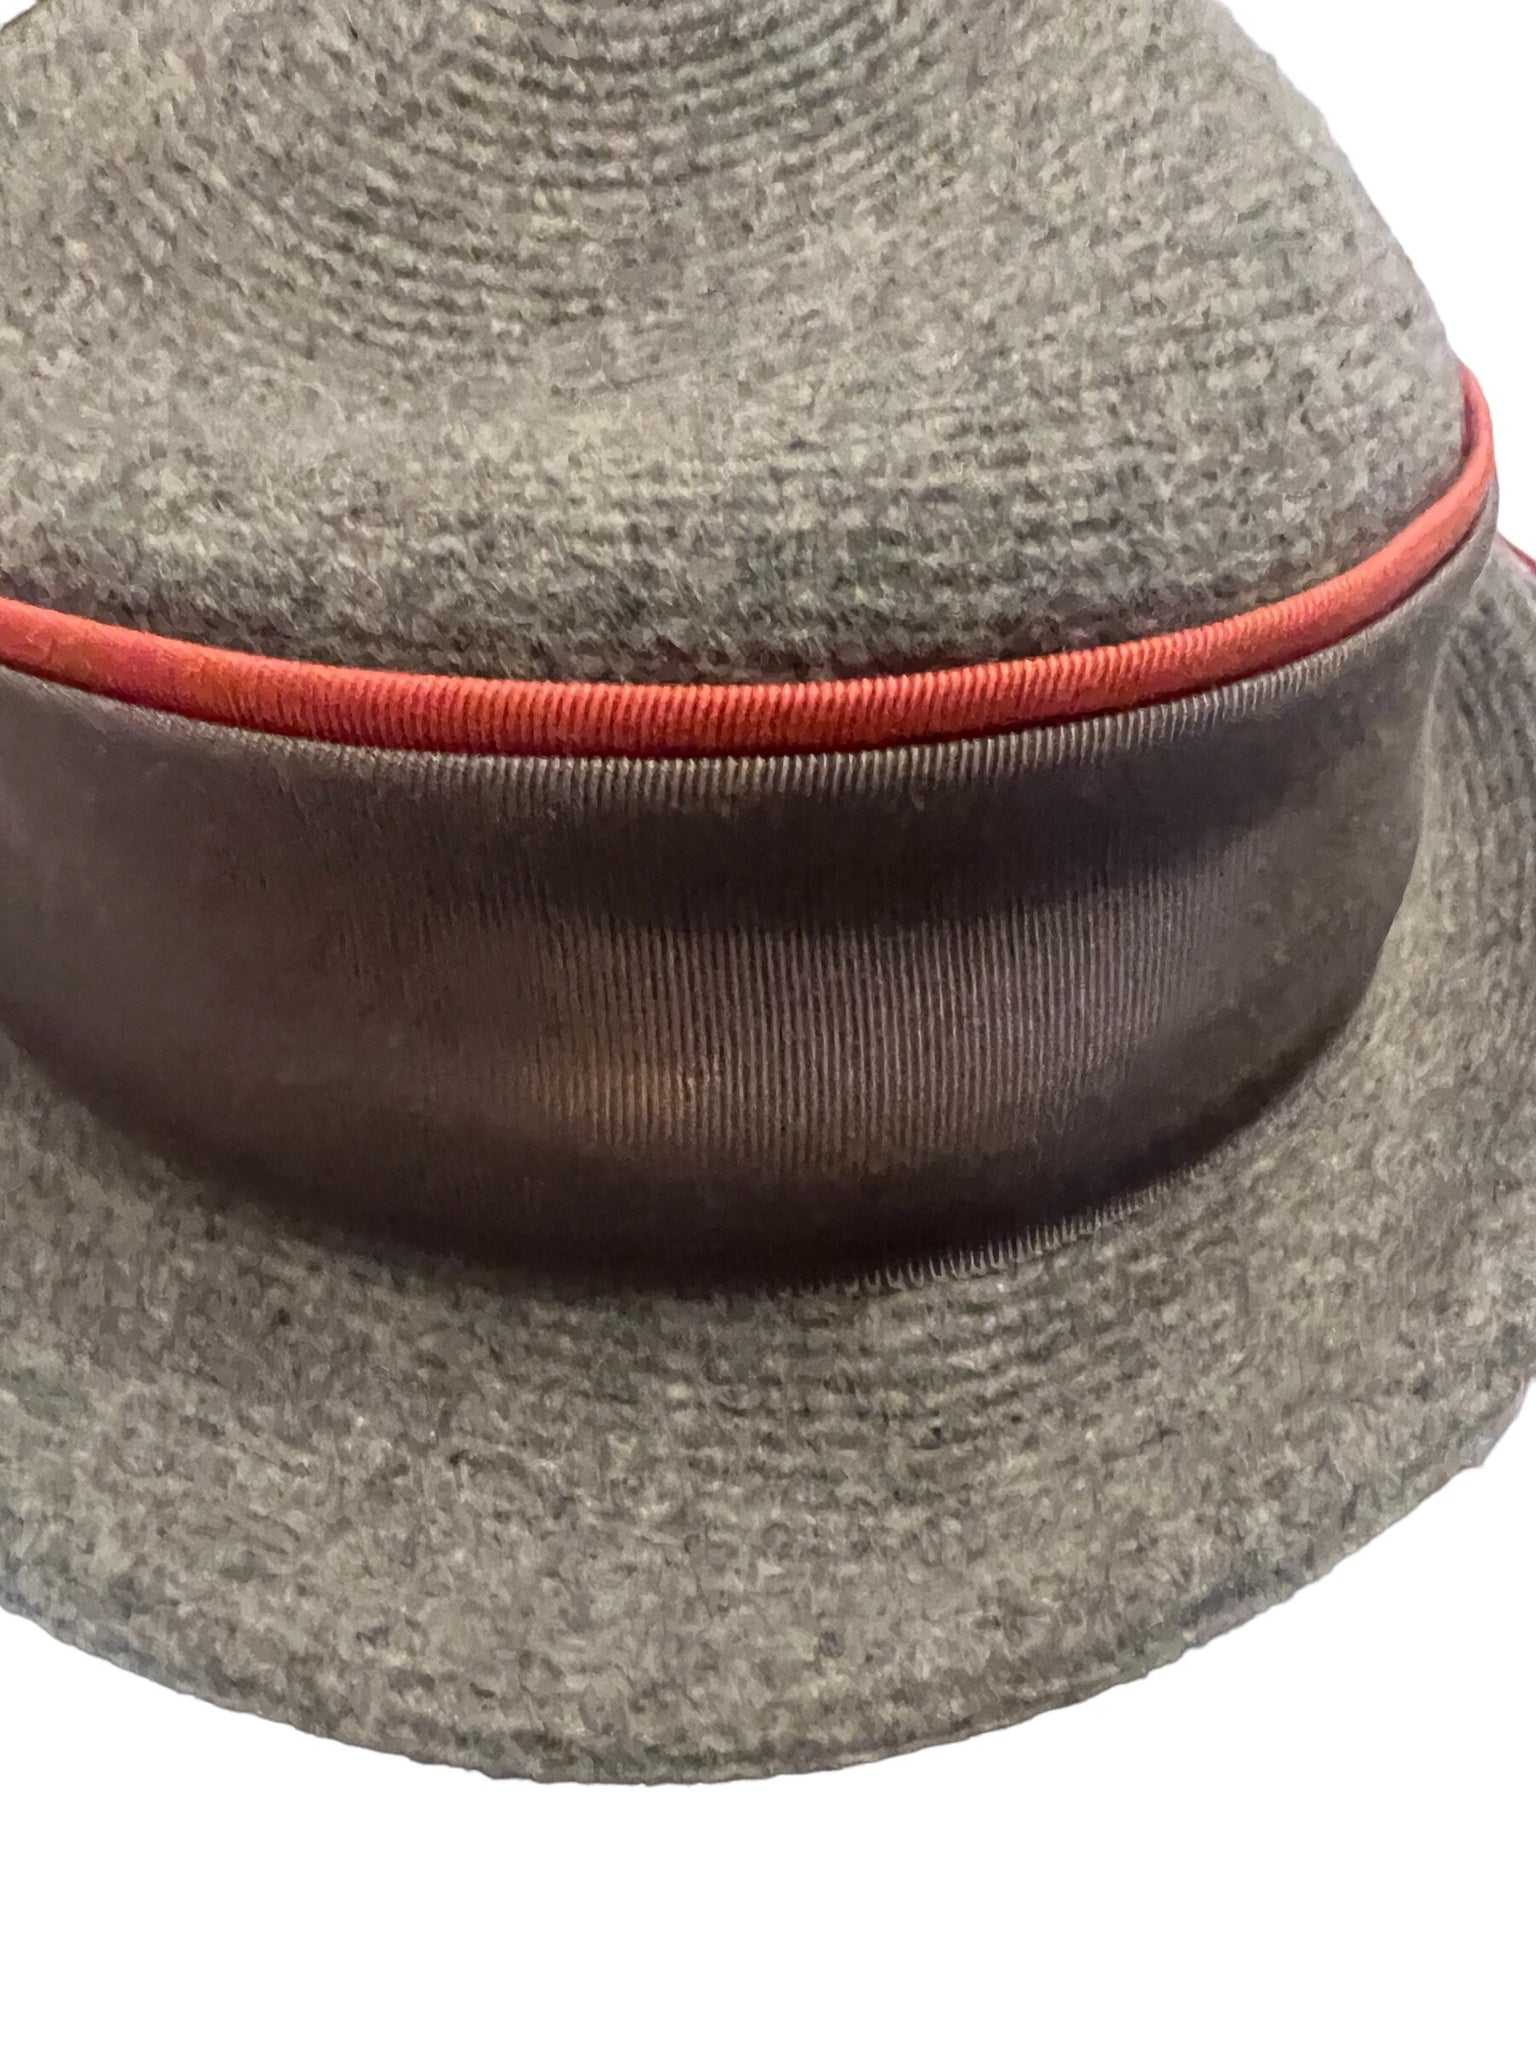 Vintage gray 60's hat